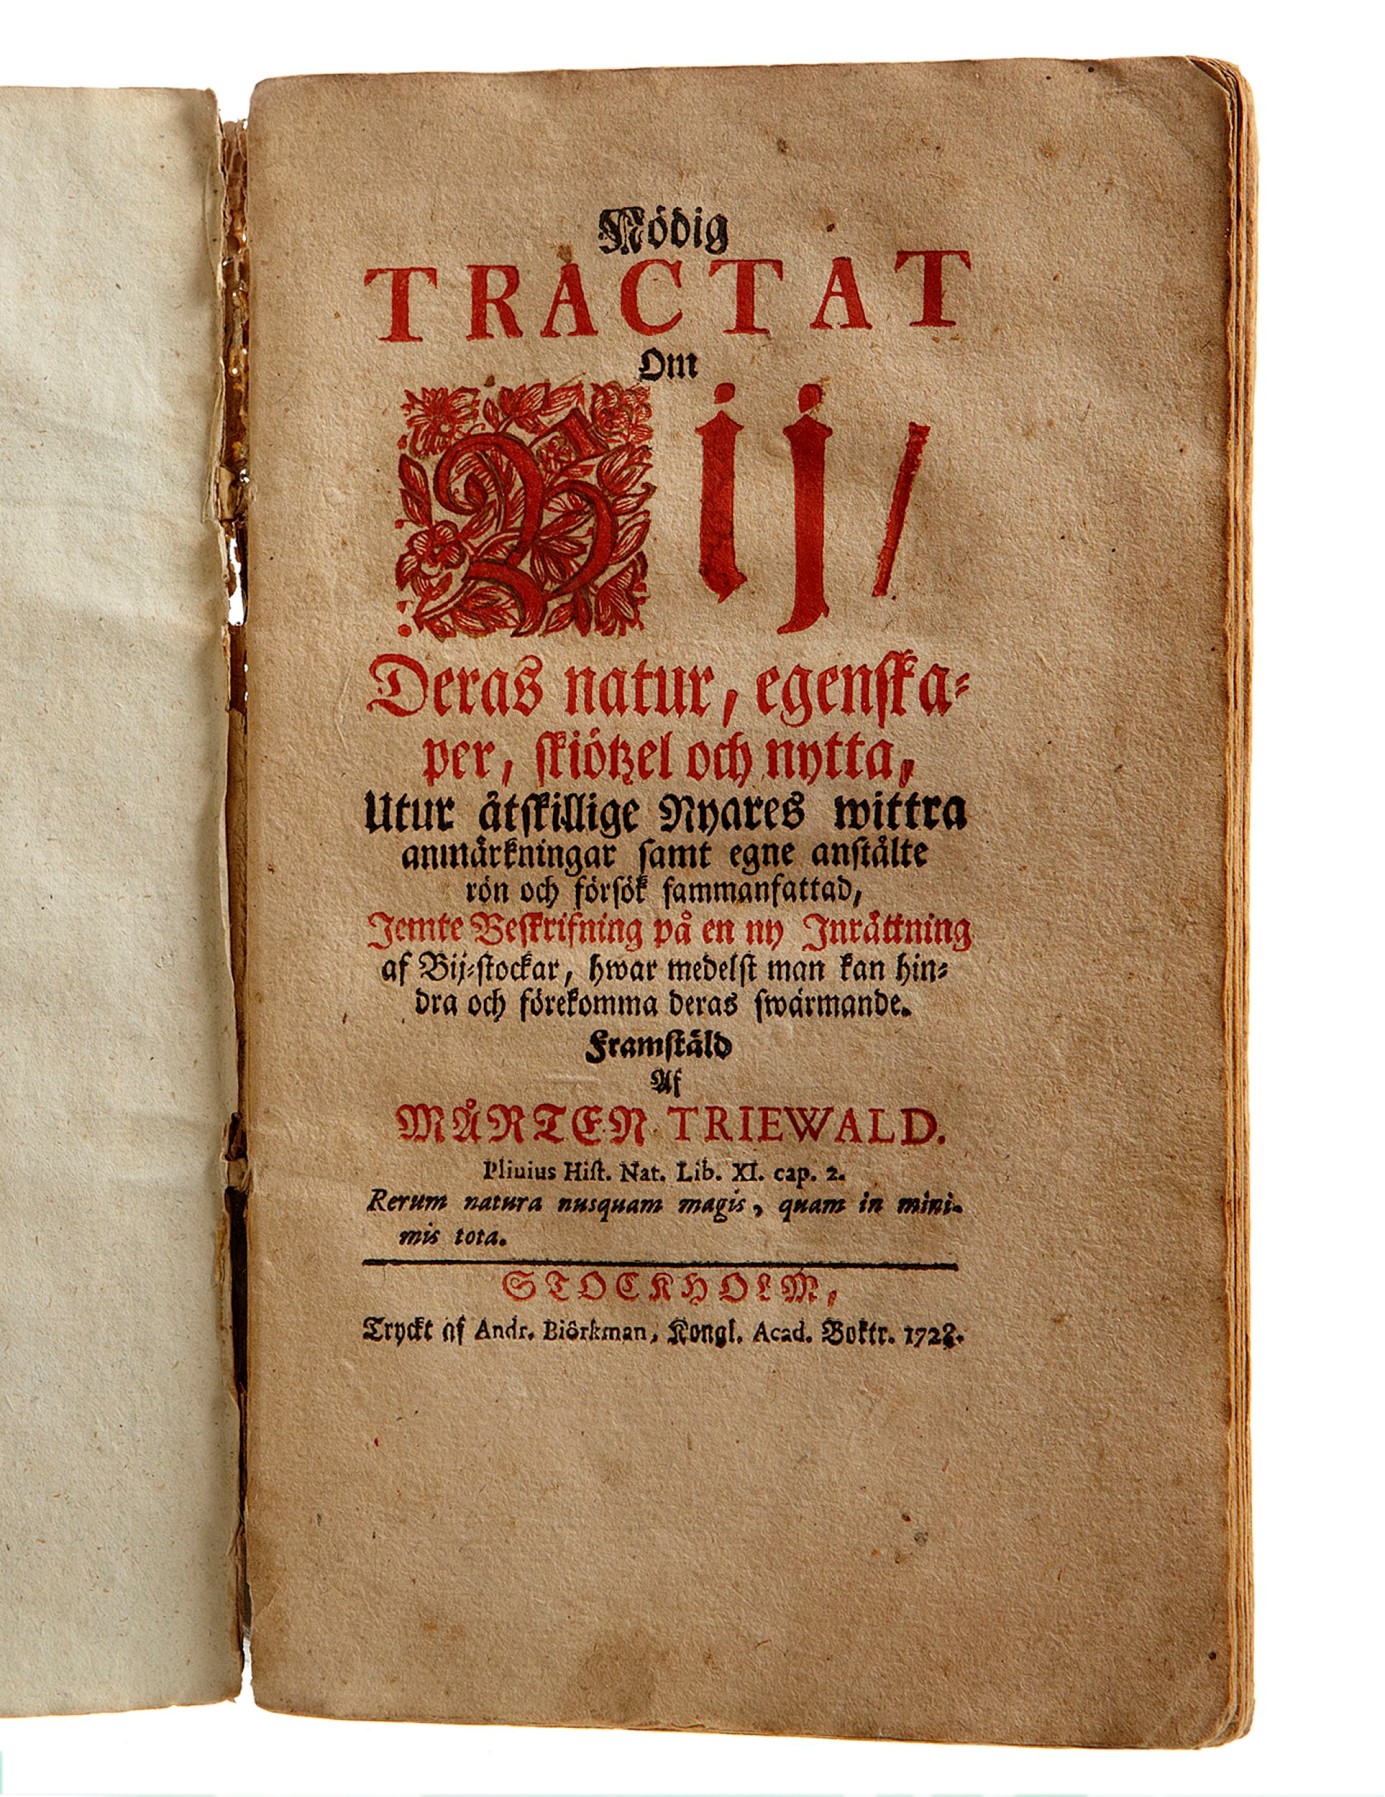 A bee book by Mårten Triewald, 1728.